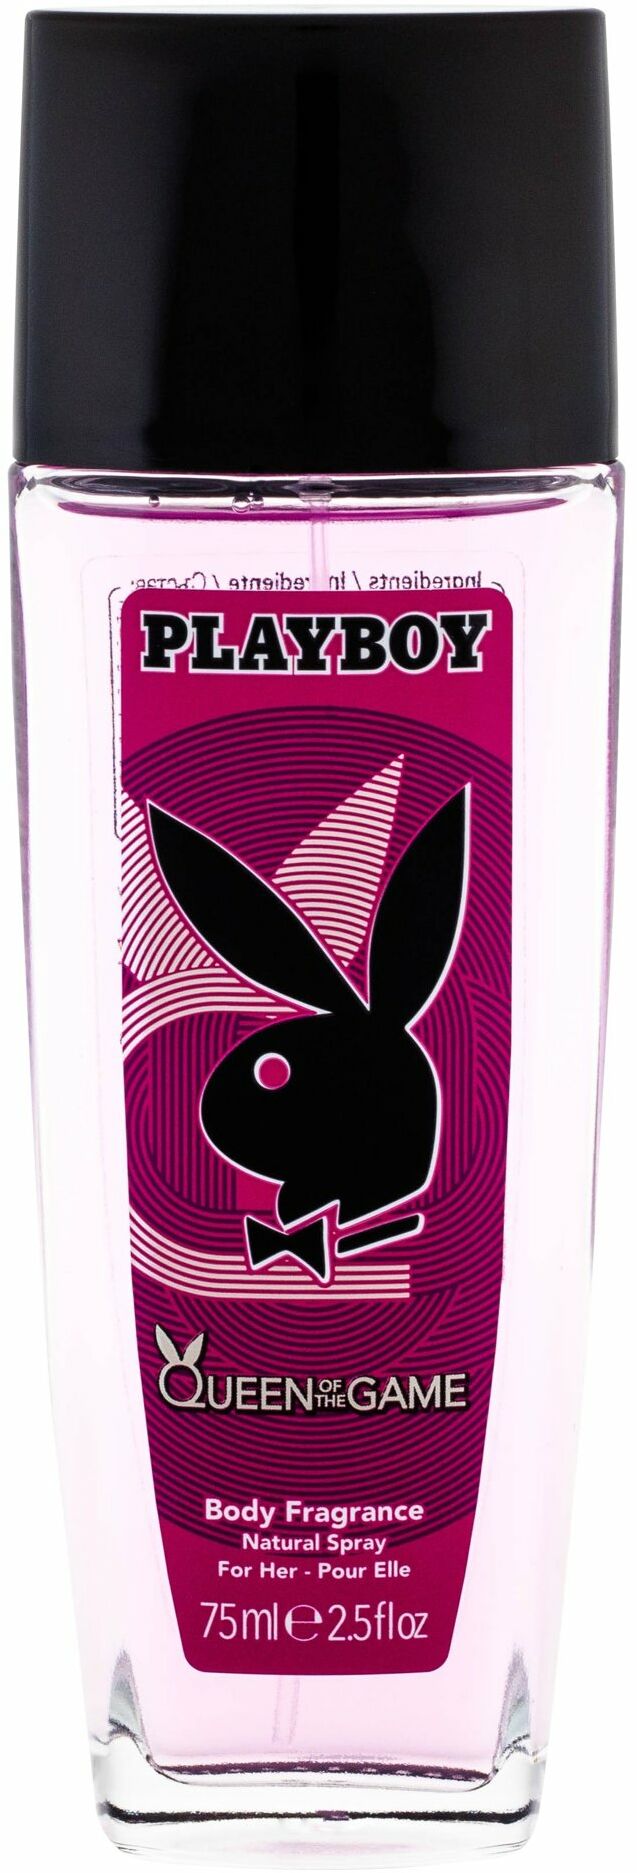 Playboy Queen of the Game For Her, Dezodorant w szklanym flakonie 75ml